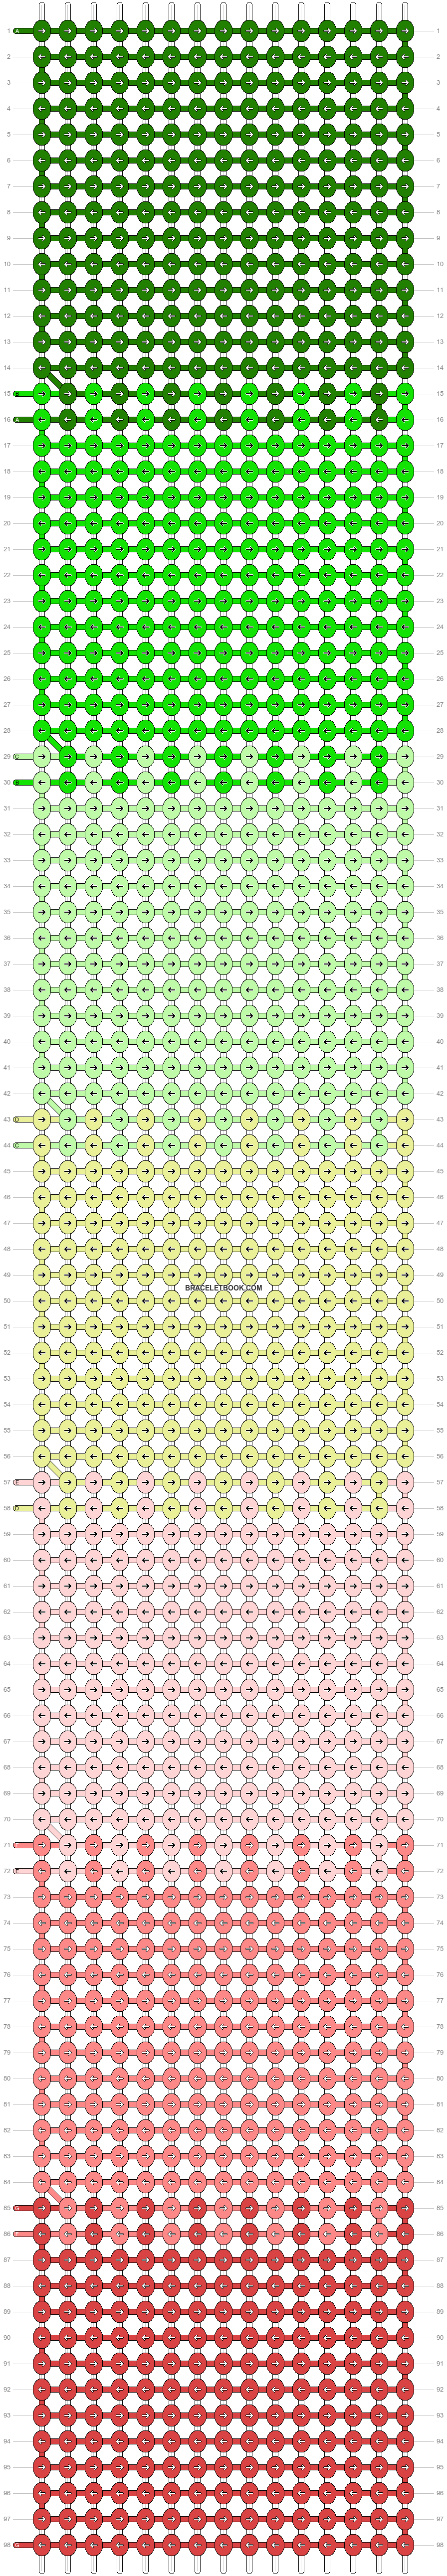 Alpha pattern #56142 variation #104629 pattern